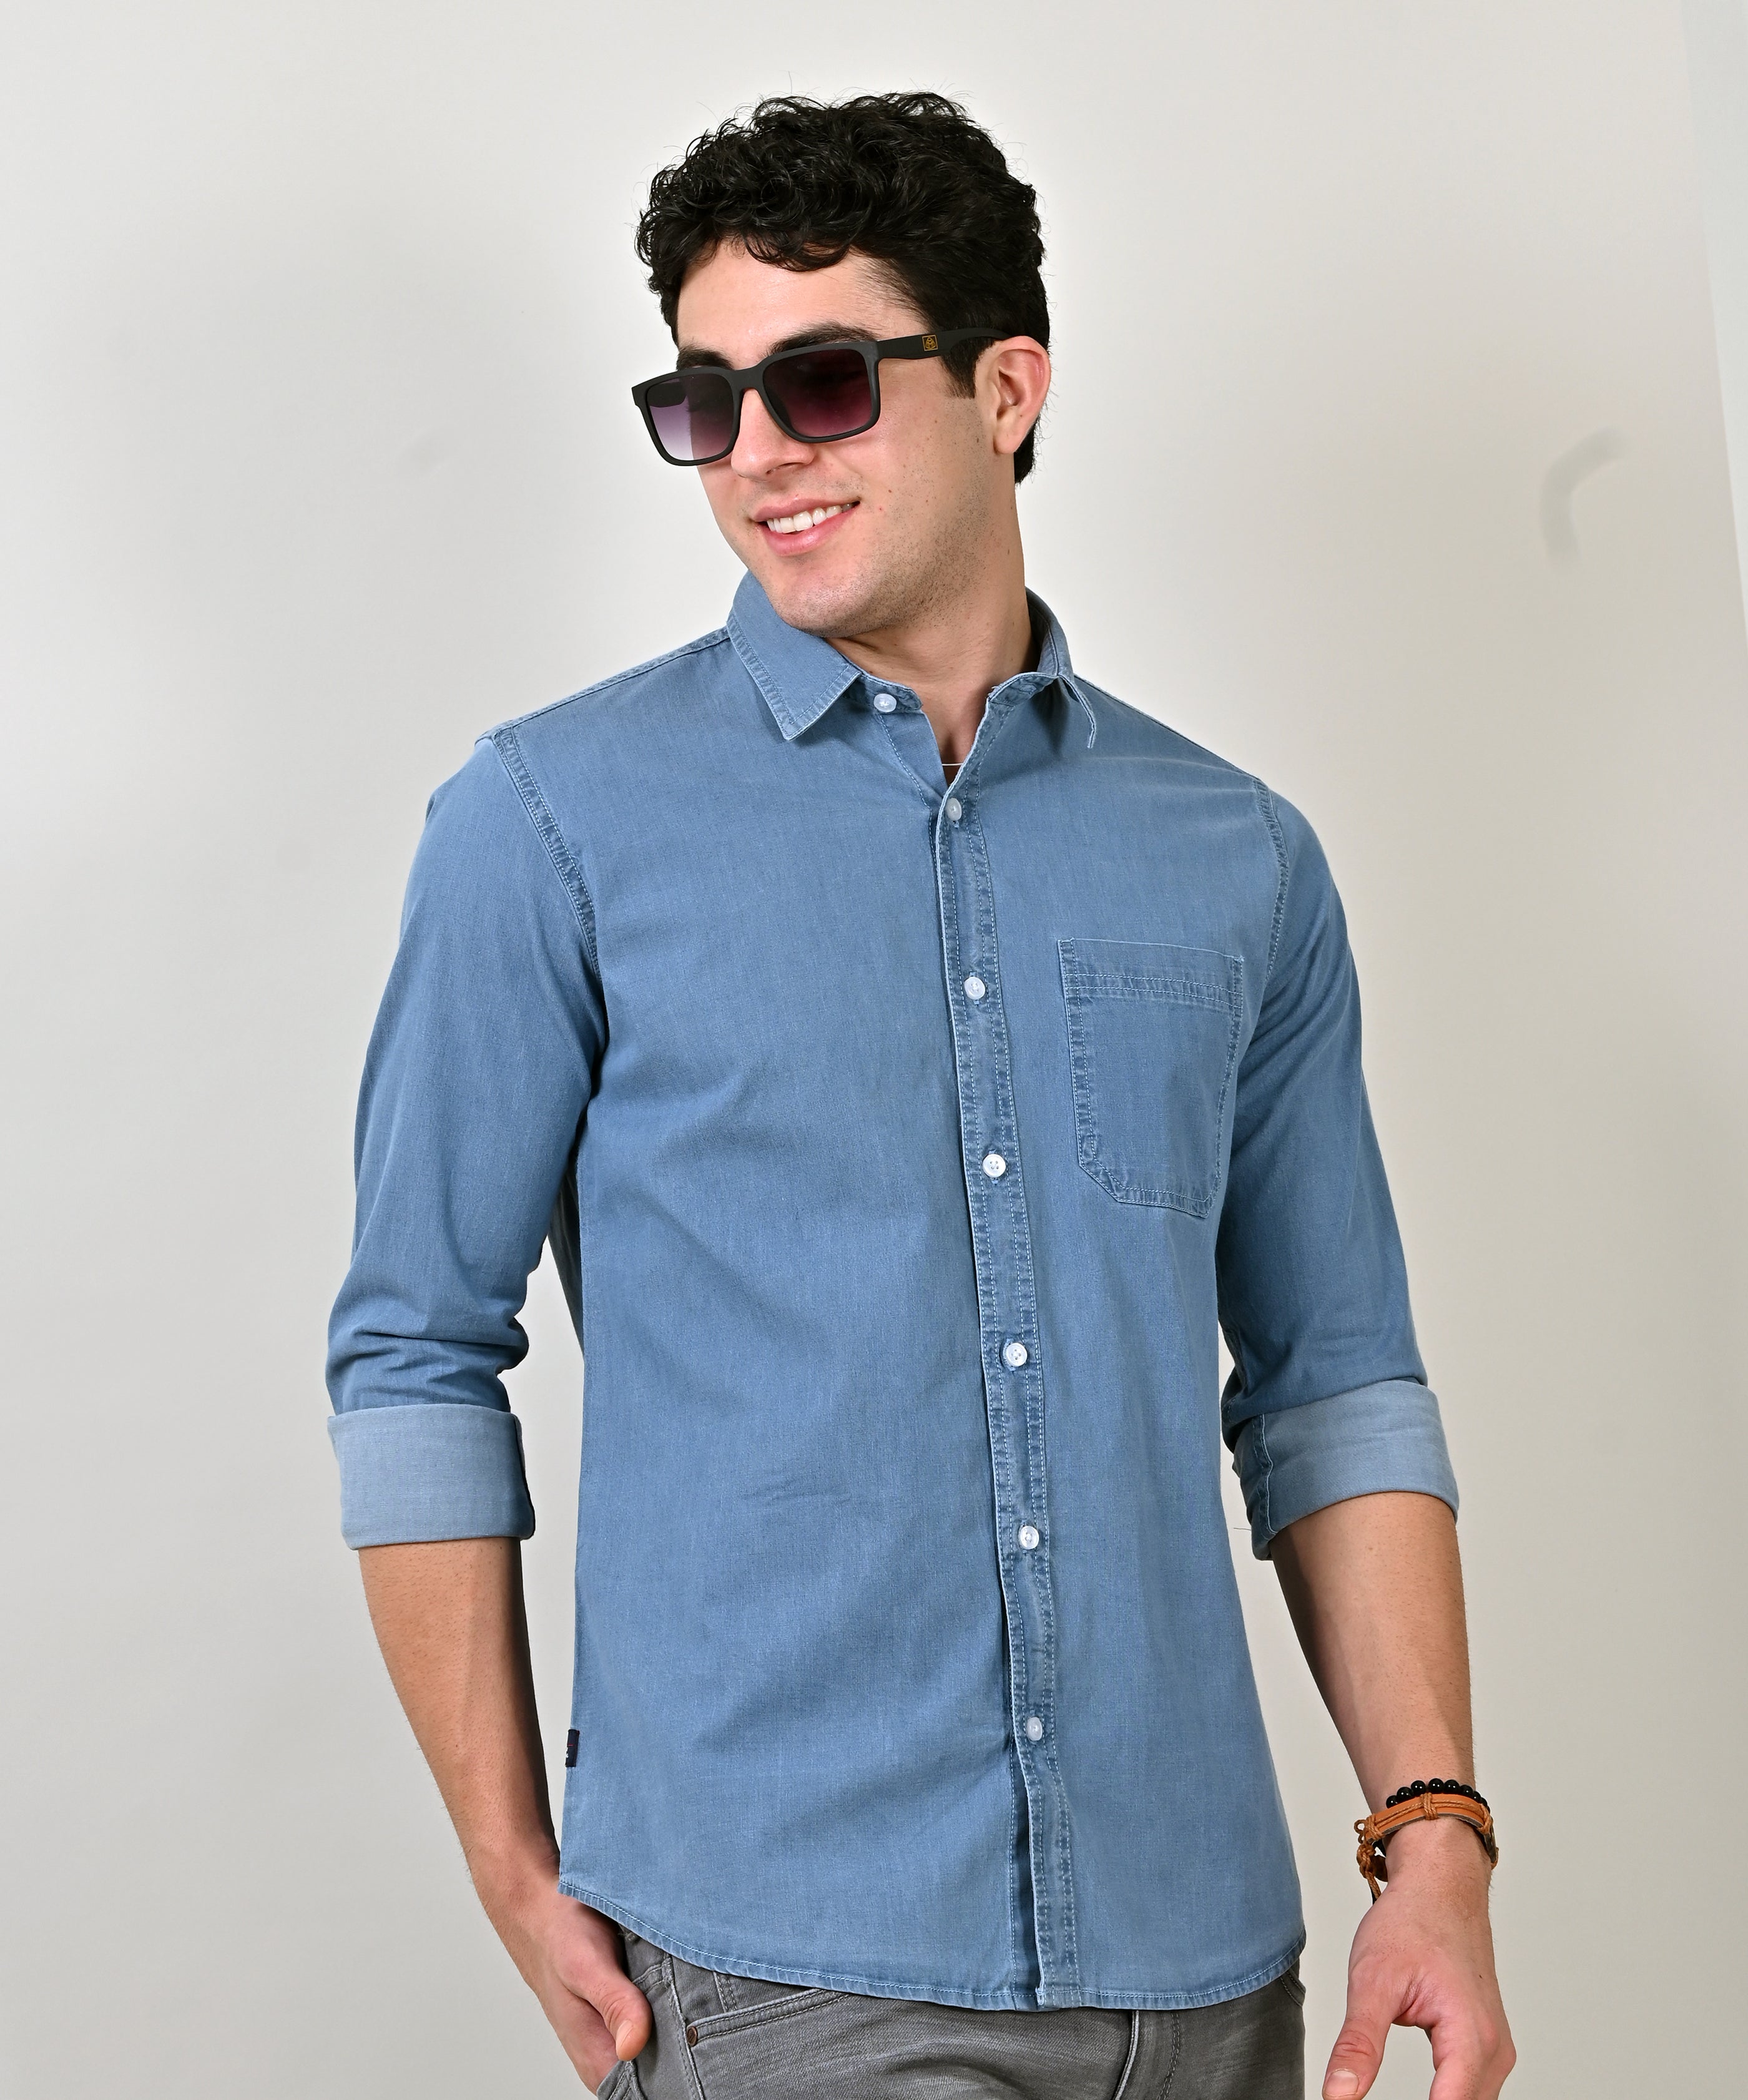 Miraan Men's Long Sleeve Casual Light-Blue Denim Shirt  (SIGBLACKDENIMXS_Black_X-Small),Size -XS